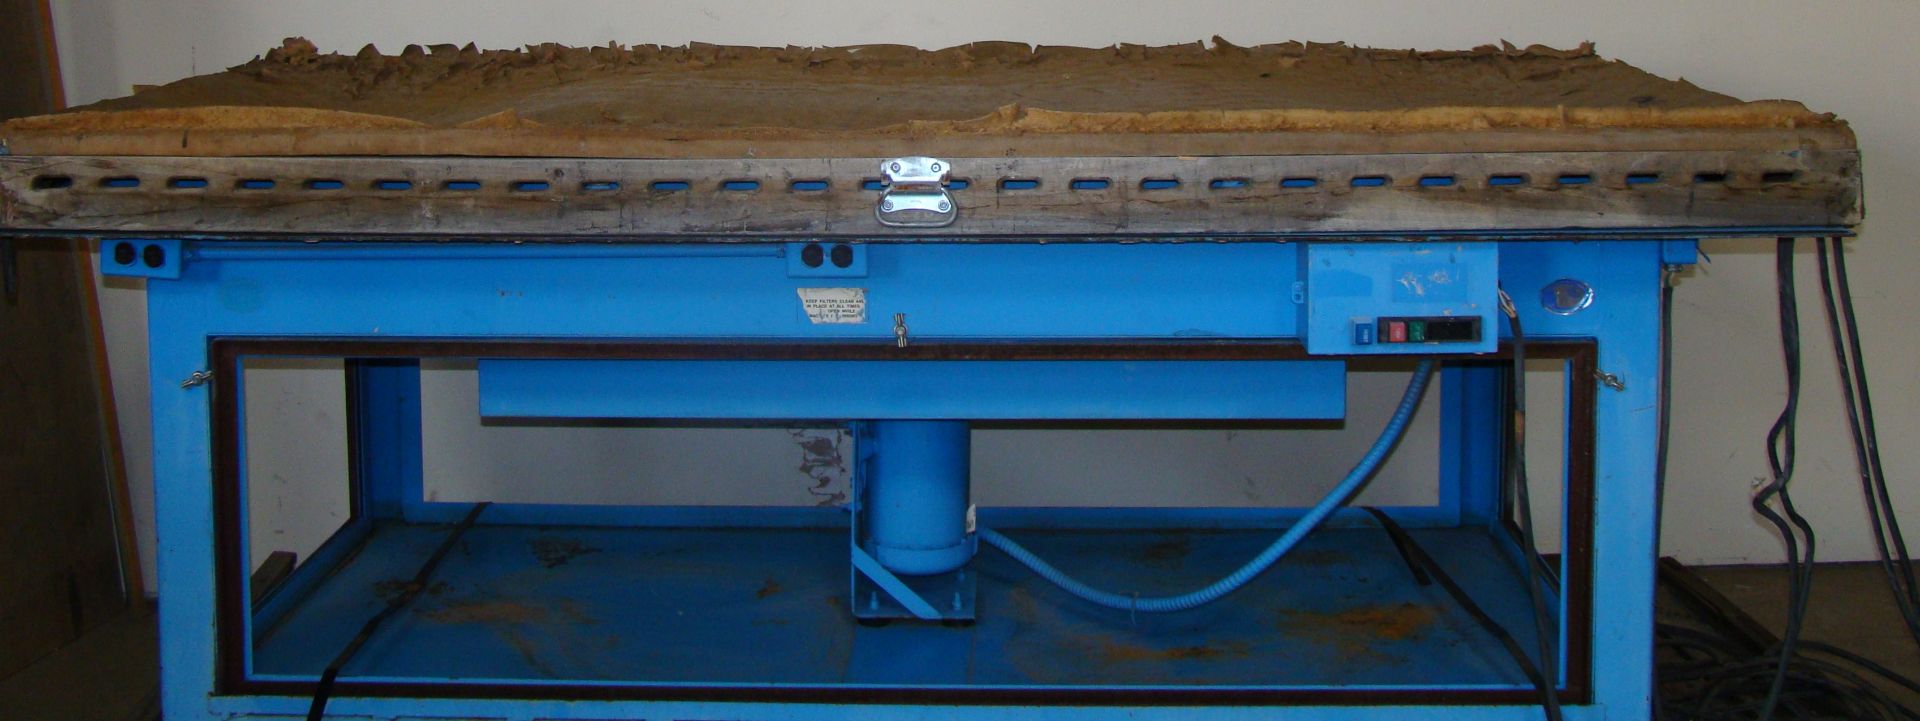 Denray Downdraft Wood Sanding Machine 4' x 8' Table Model 9600, 2HP 230/460 Volt 3PH